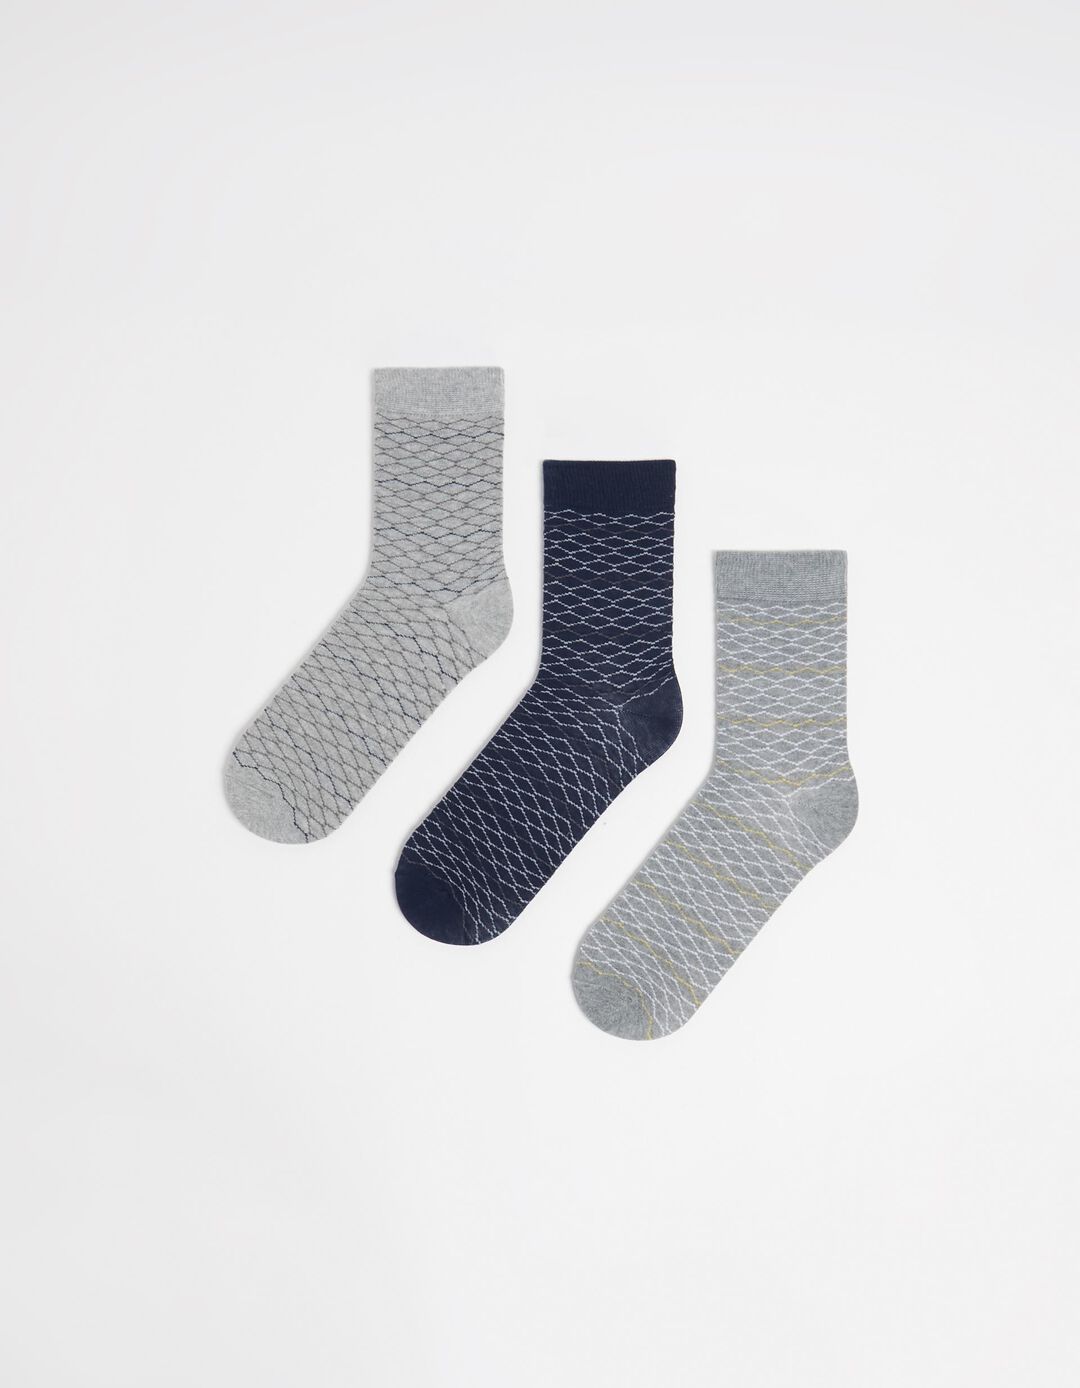 Pack 3 Pairs of Geometric Socks, Men, Multicolor